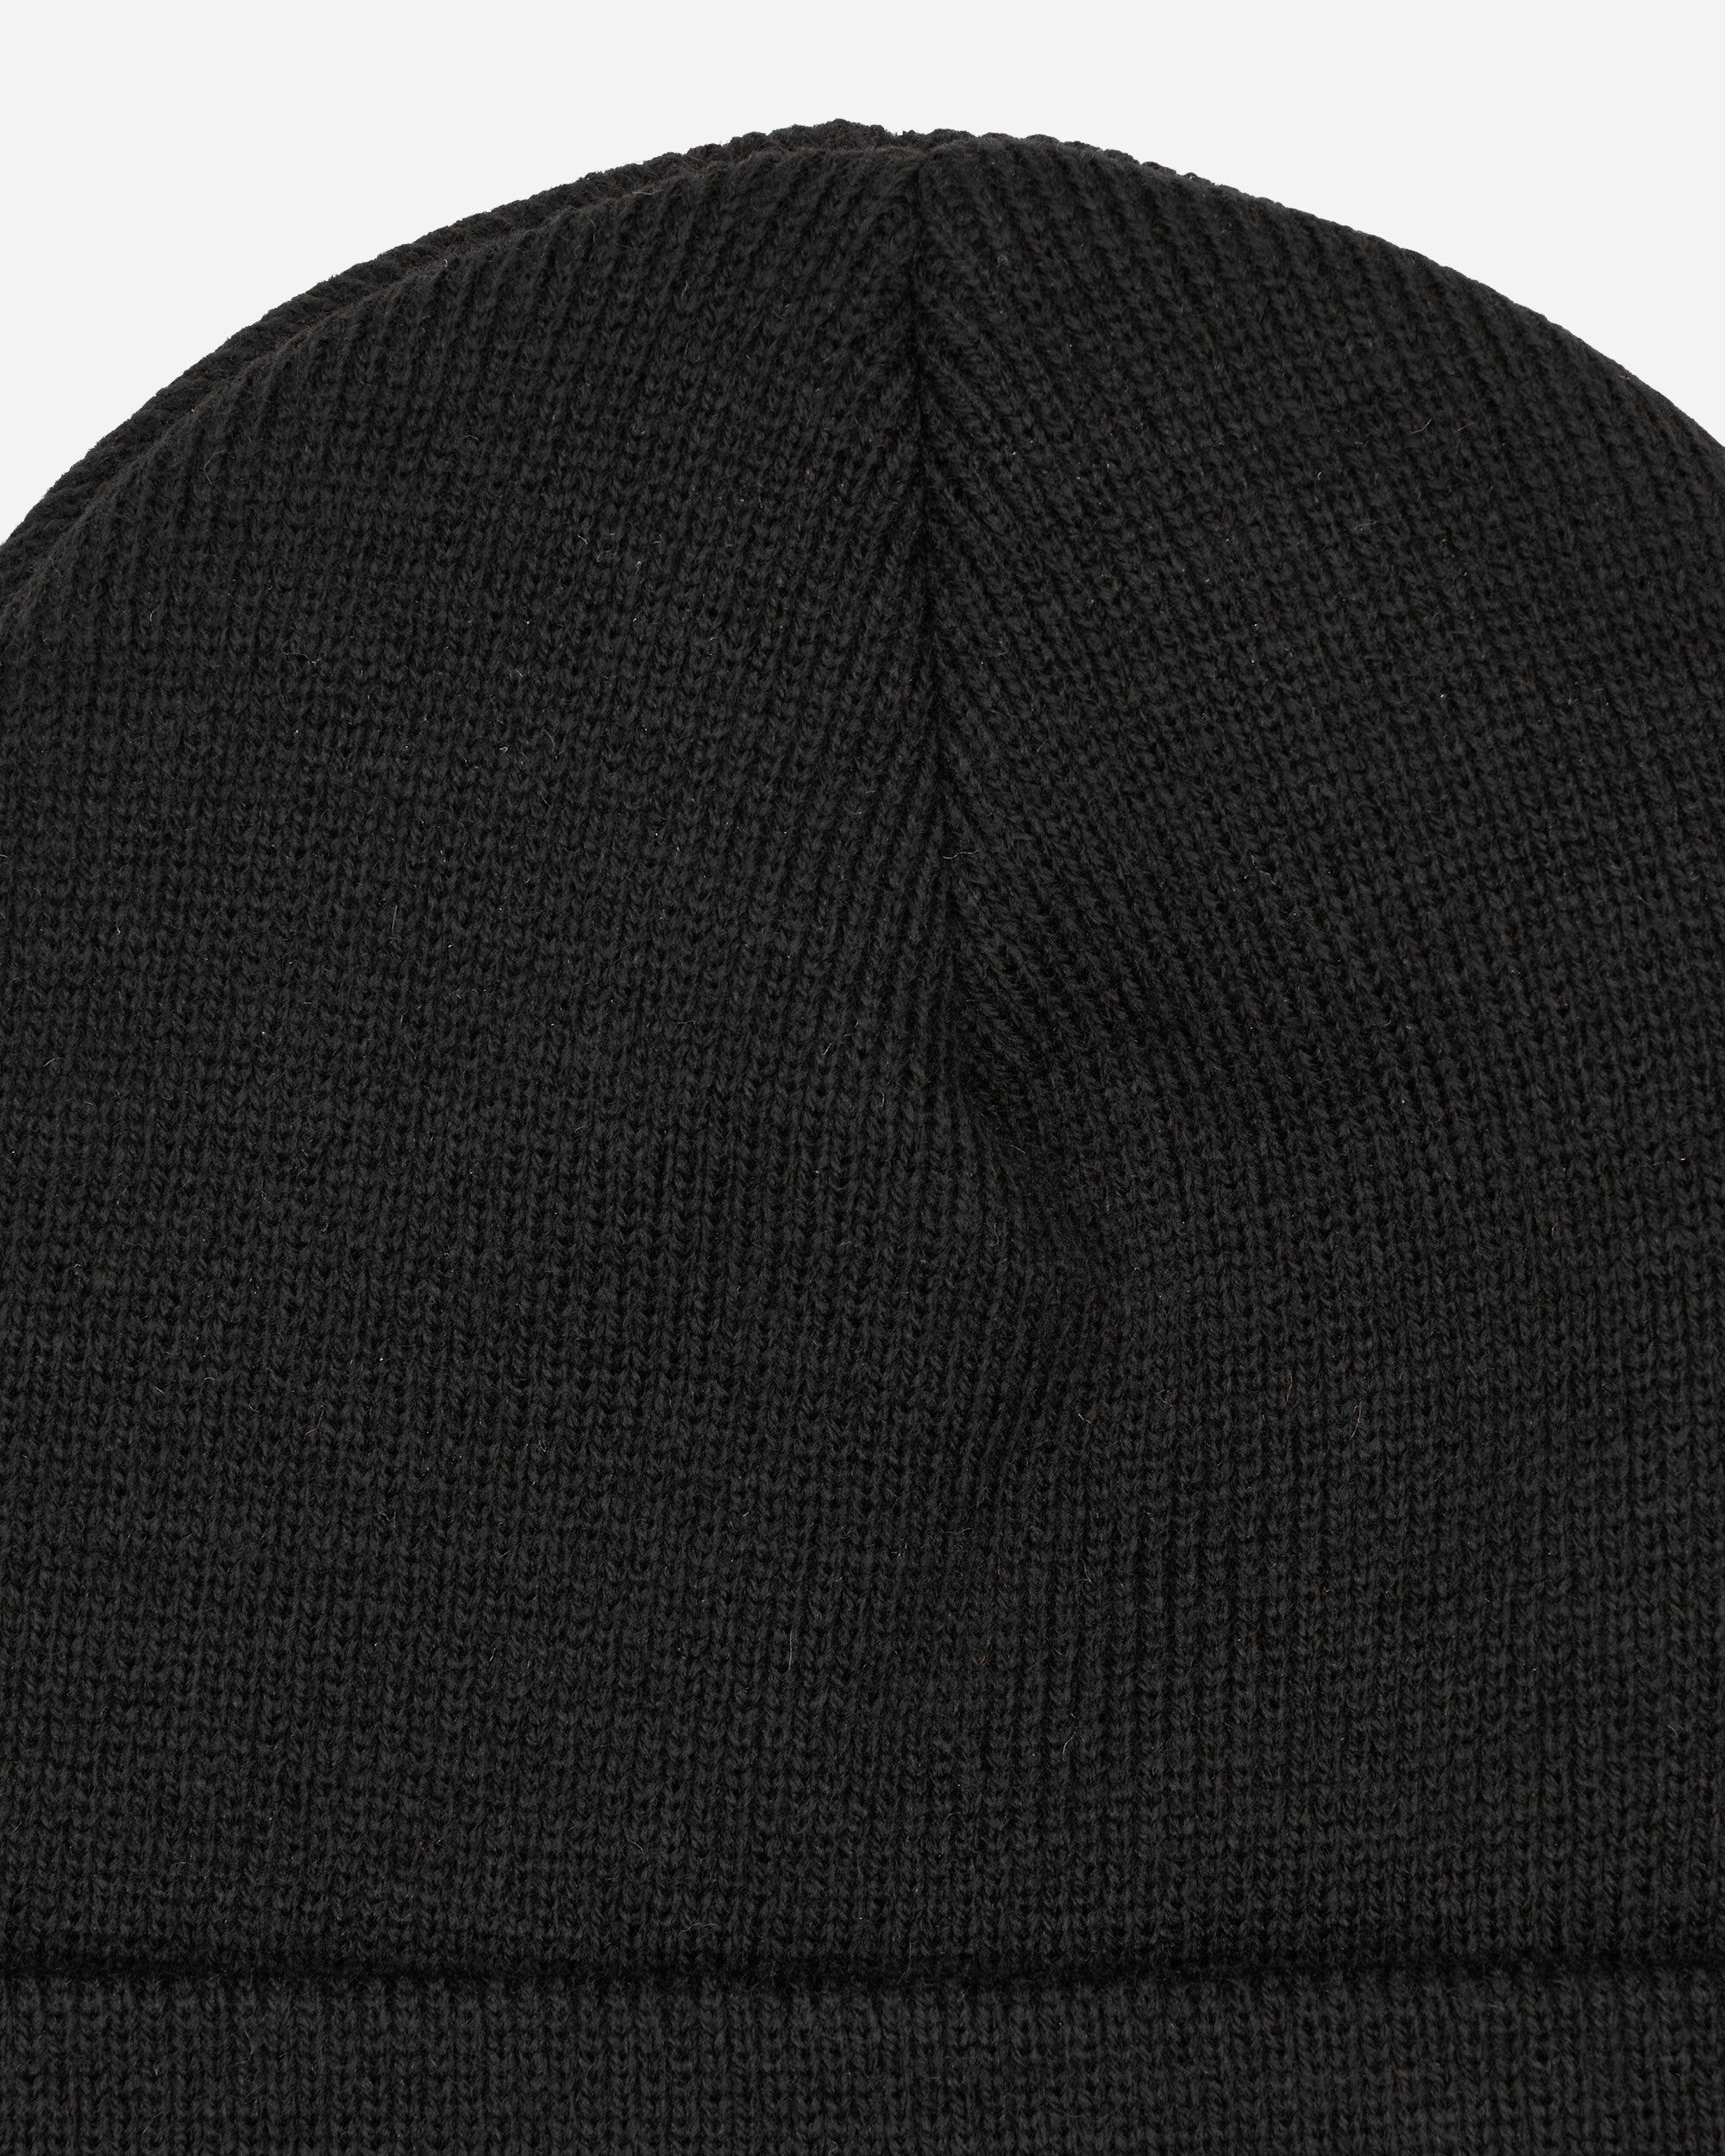 Stüssy Stock Cuff Beanie Black Hats Beanies 1321020 0001